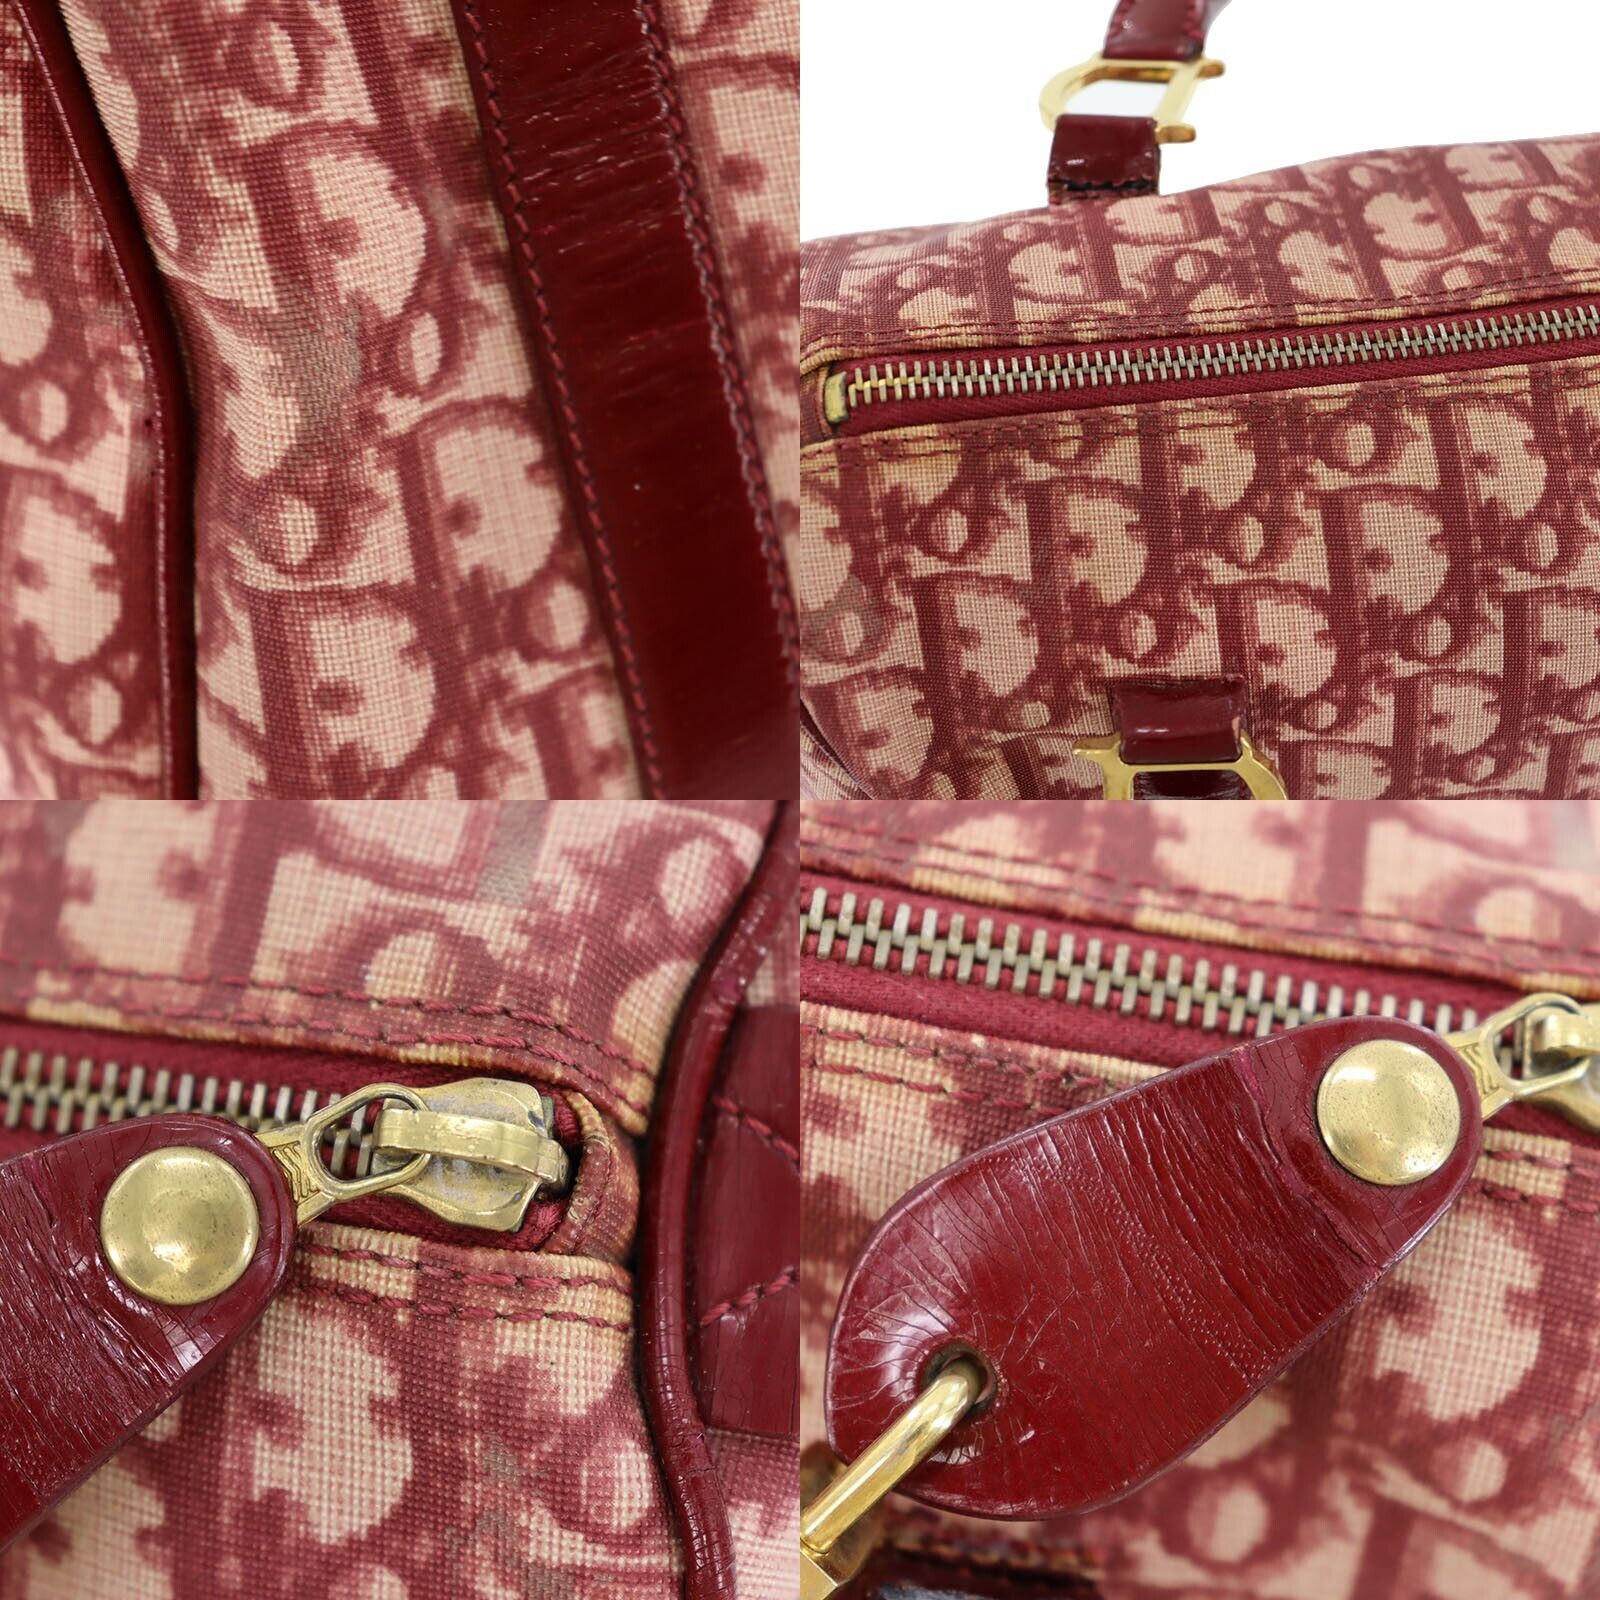 Trotter Mini Boston Bag, Used & Preloved Dior Handbag, LXR USA, Red